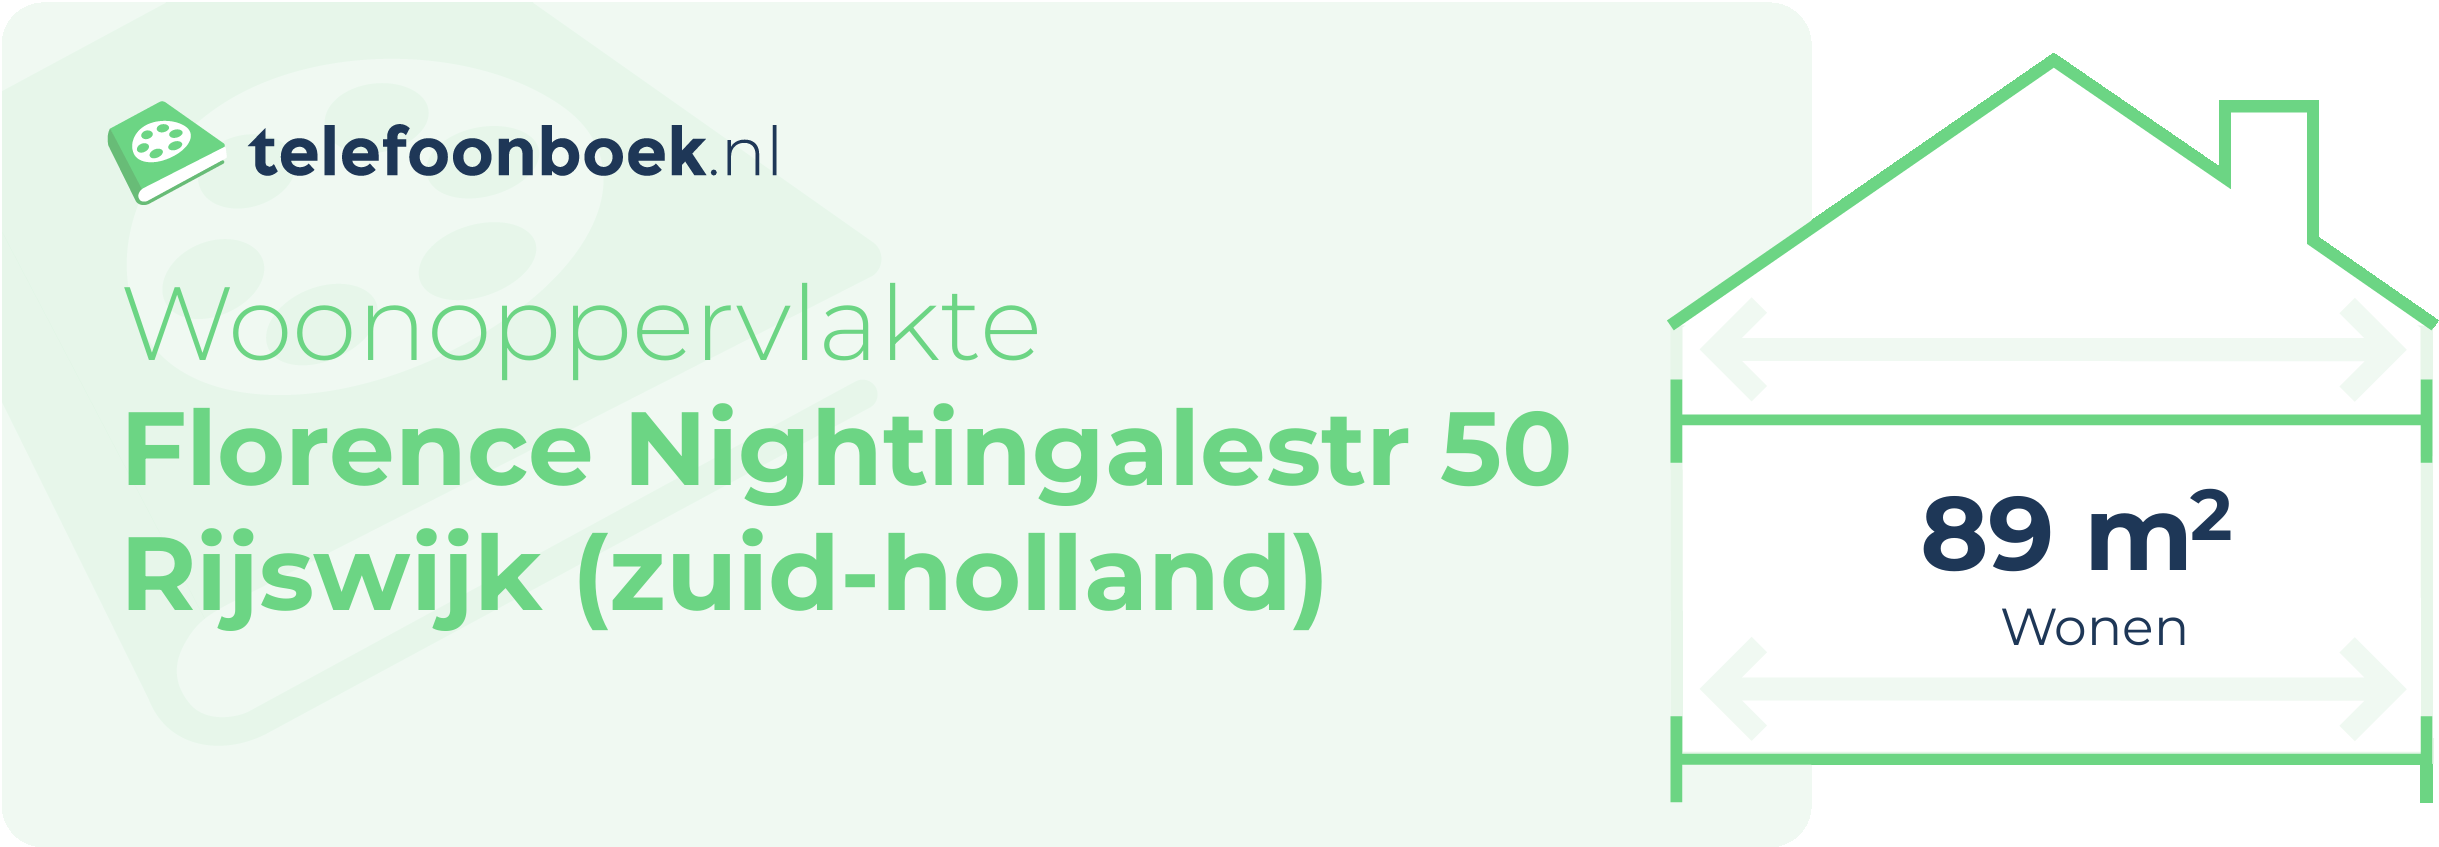 Woonoppervlakte Florence Nightingalestr 50 Rijswijk (Zuid-Holland)